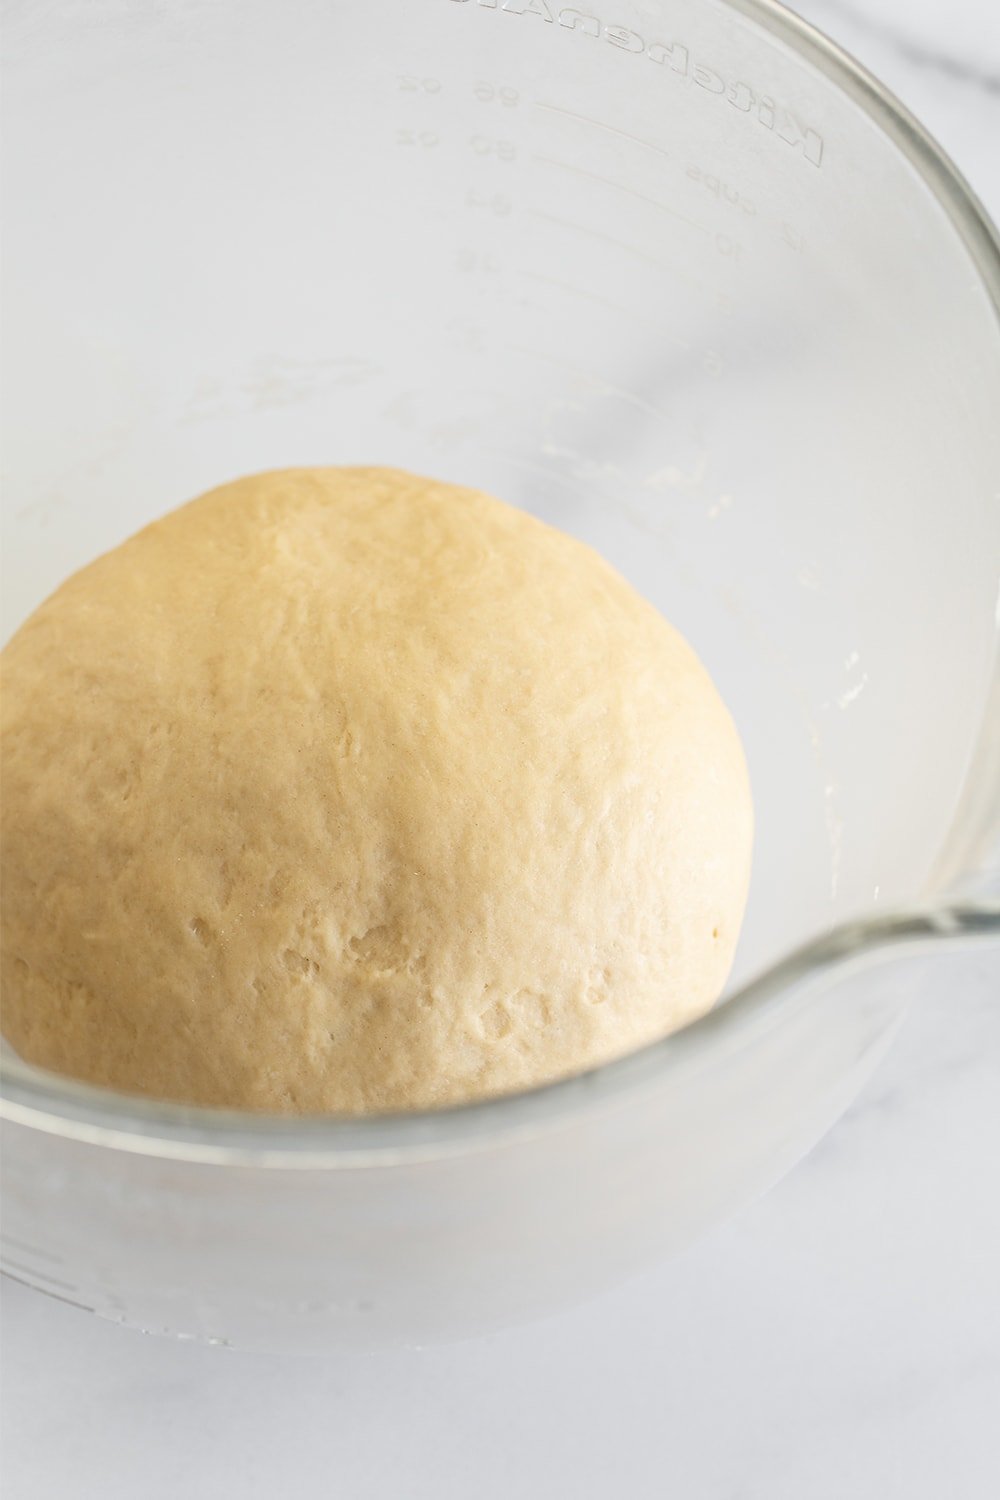 rising dough in a glass bowl